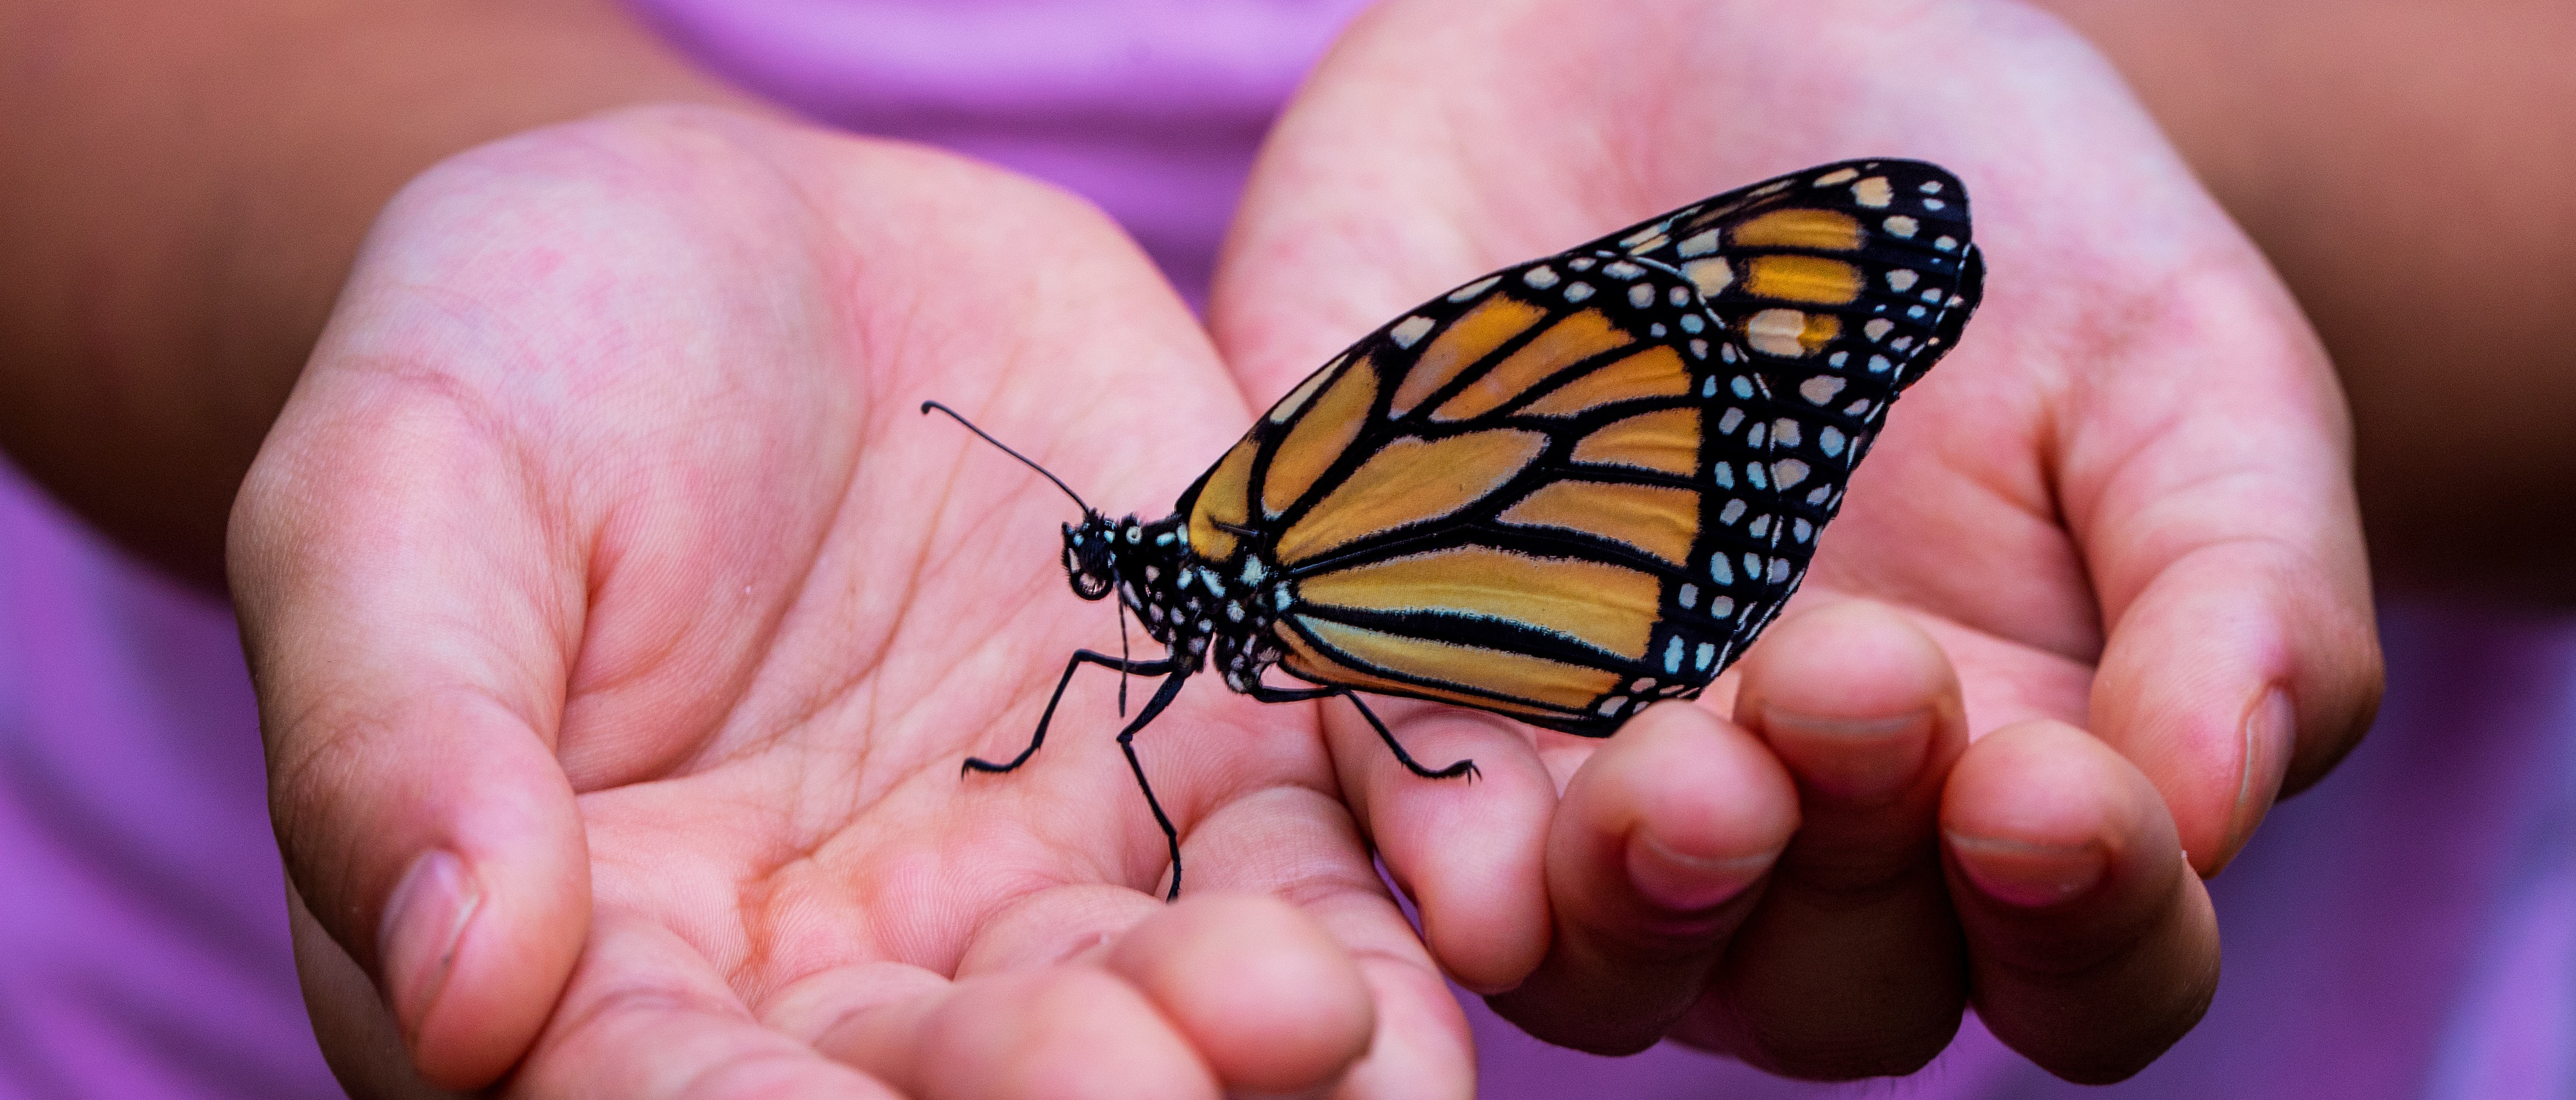 farfalla in mano ad una bambina